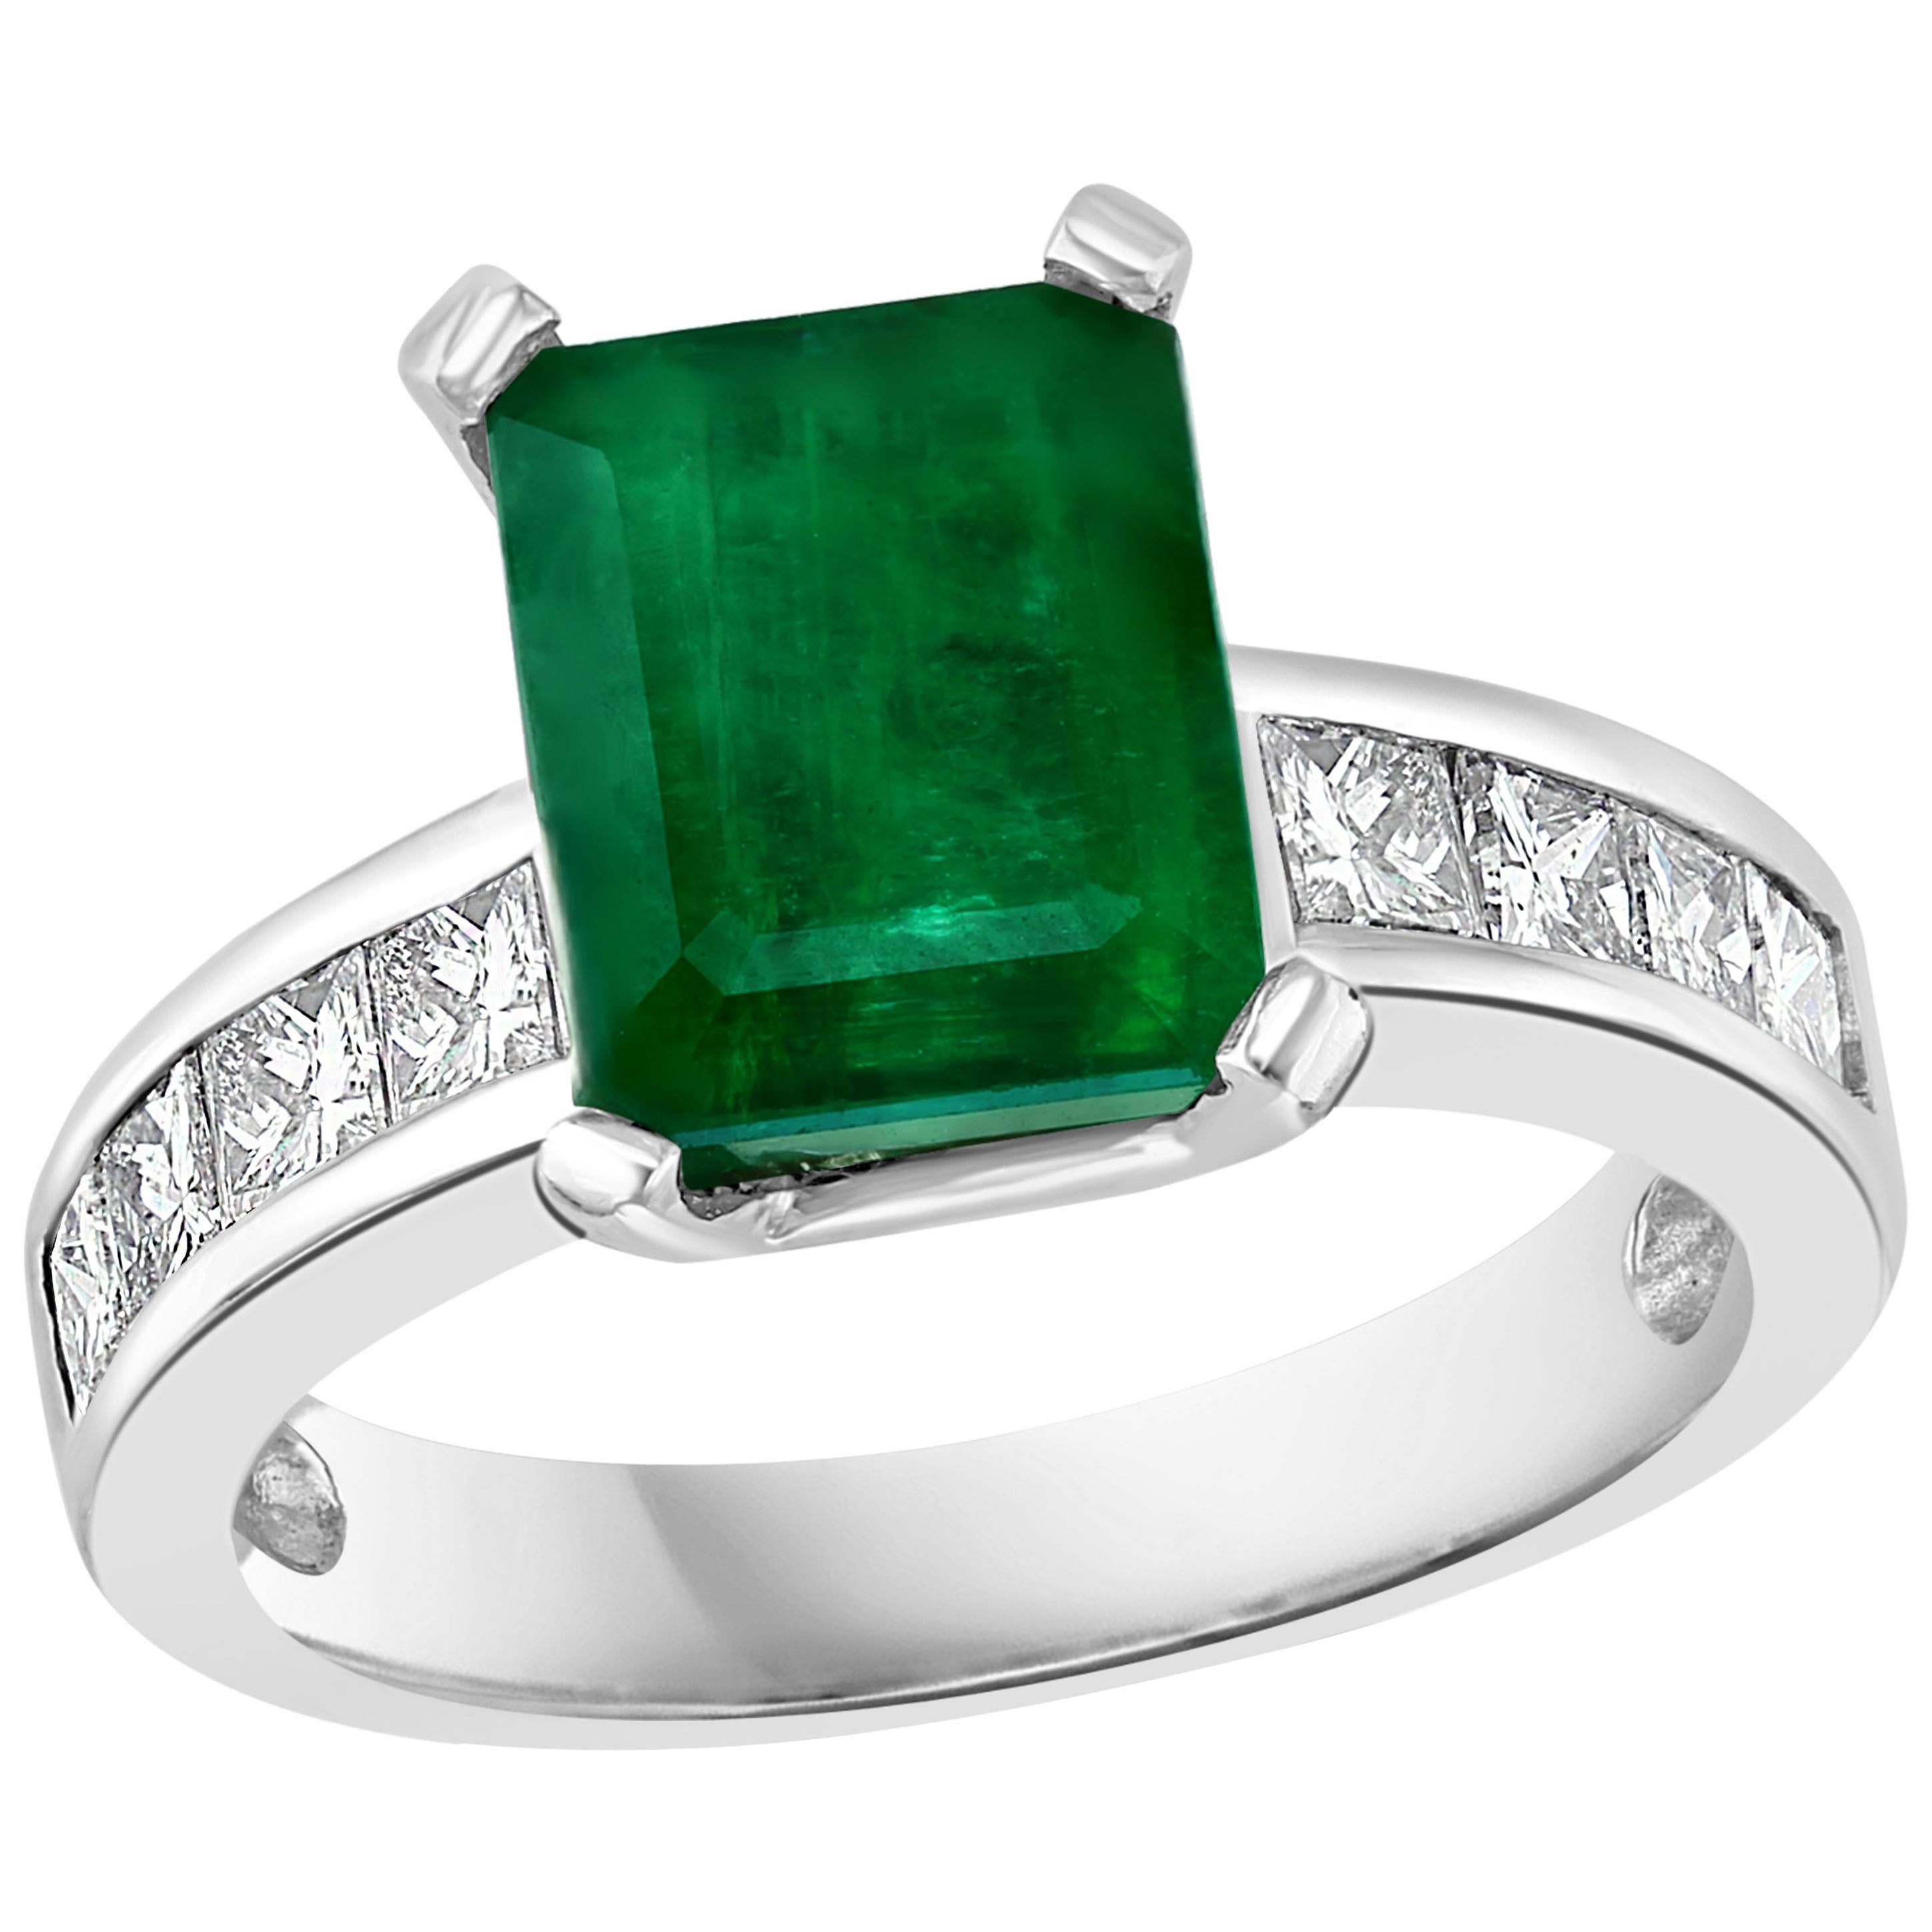 3.5 Carat Emerald Cut Emerald and 0.5 Carat Diamond Ring 14 Karat White Gold